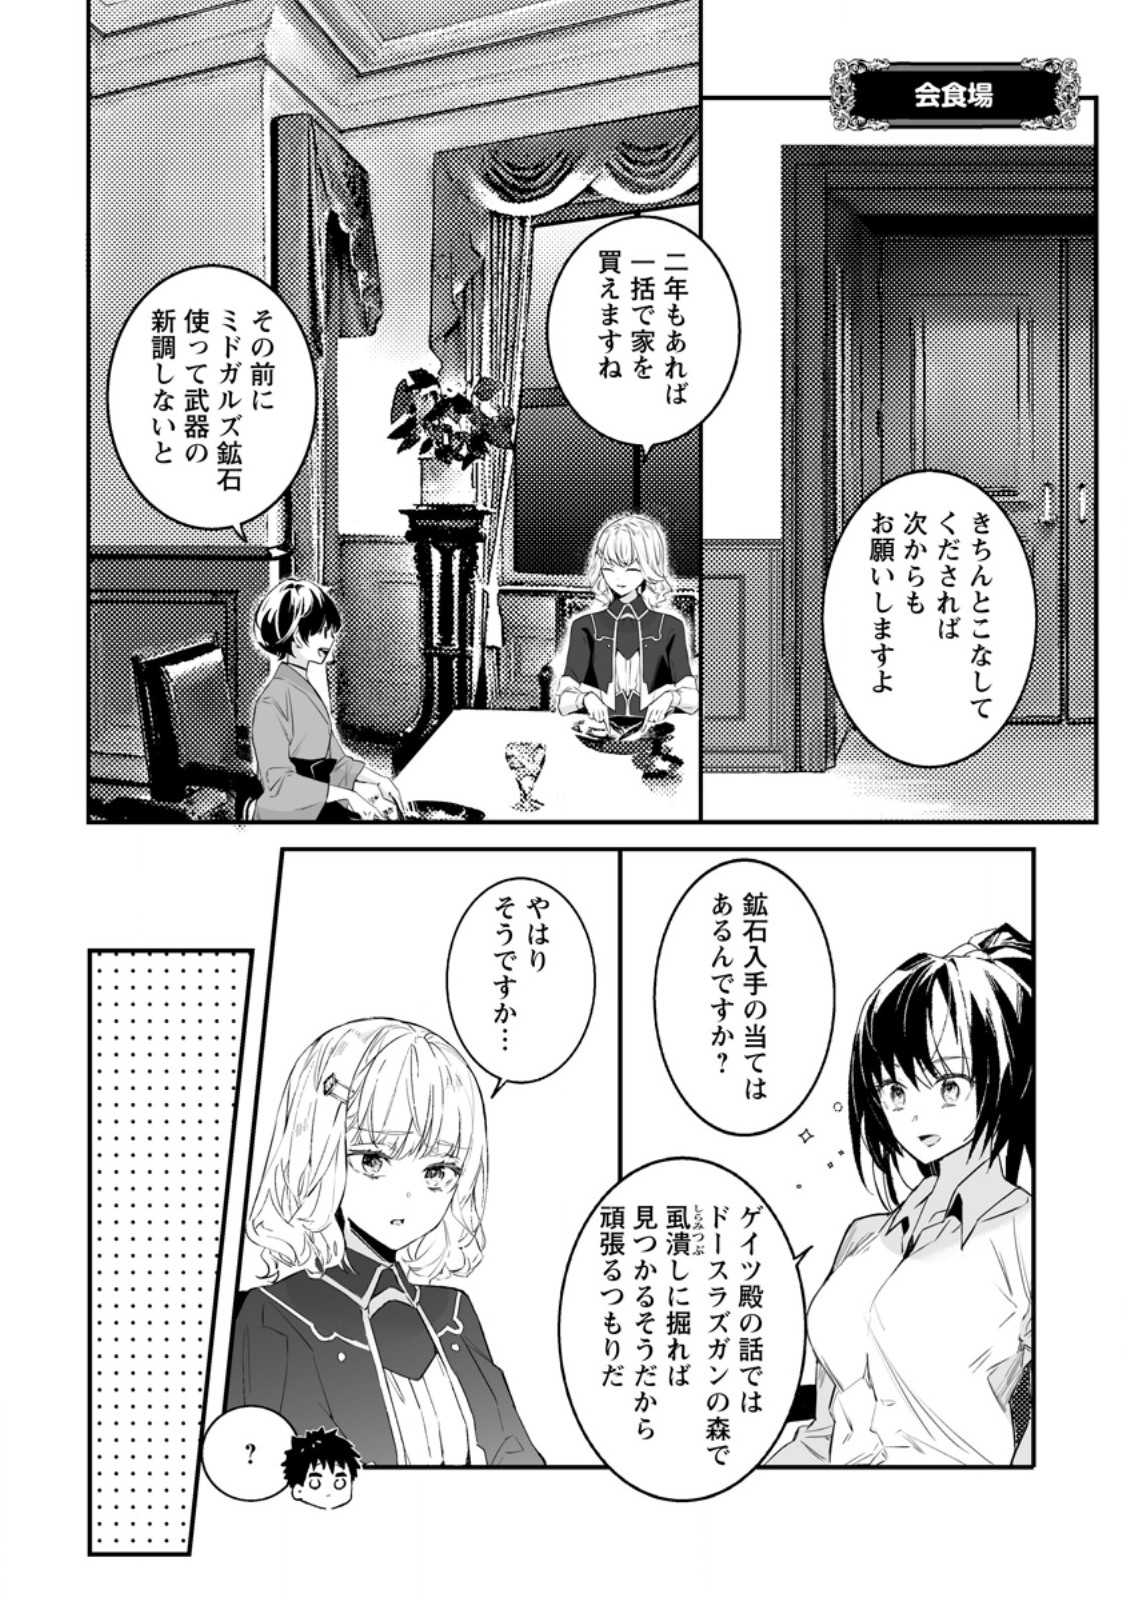 Hakui no Eiyuu - Chapter 33.3 - Page 3